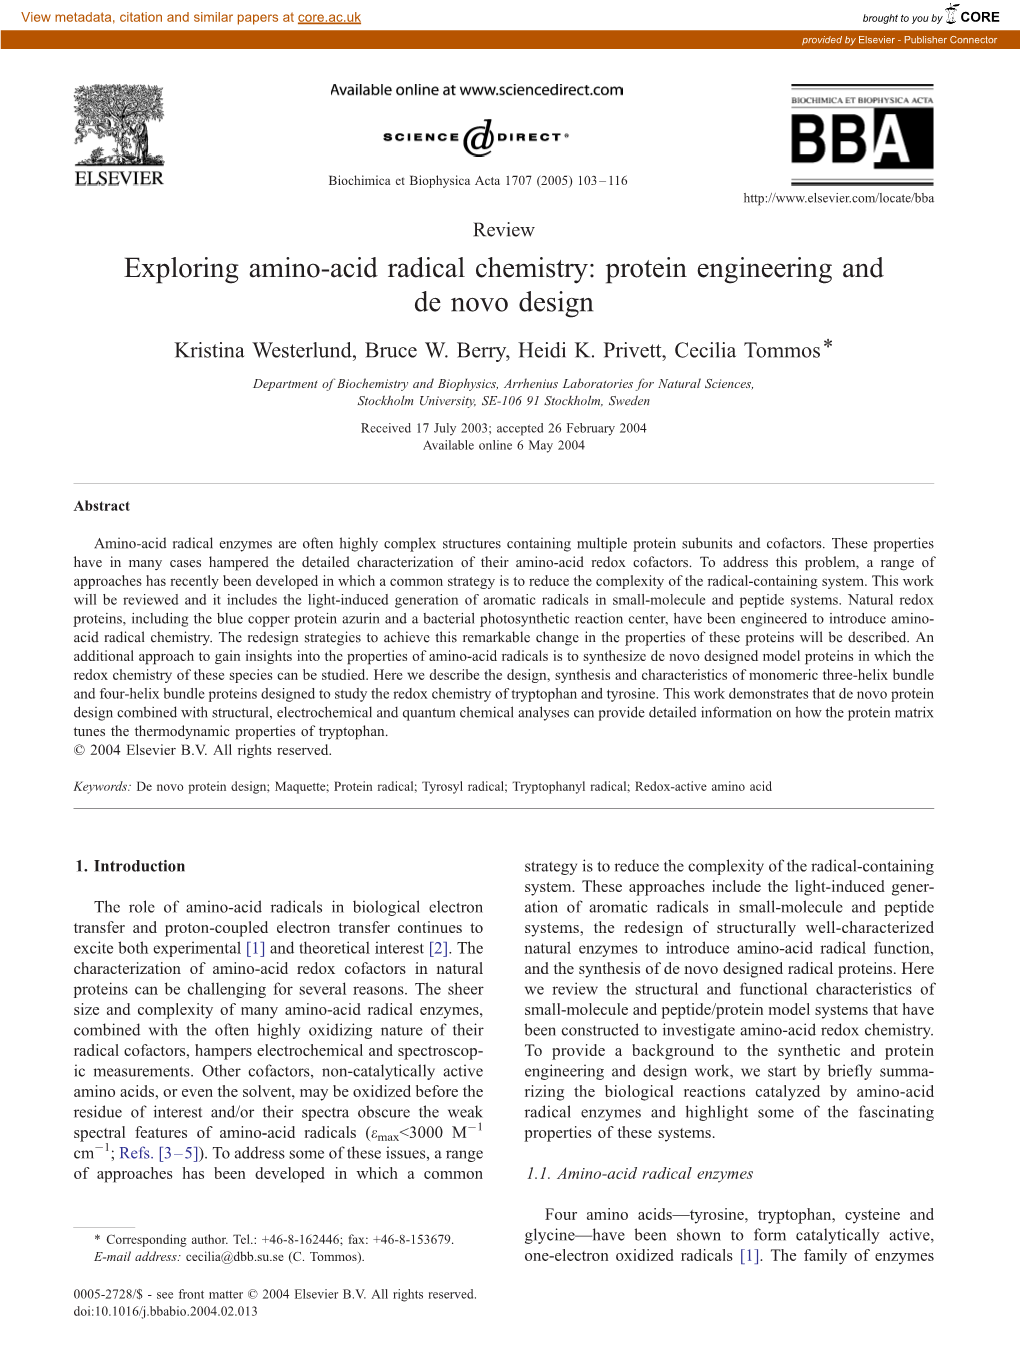 Exploring Amino-Acid Radical Chemistry: Protein Engineering and De Novo Design